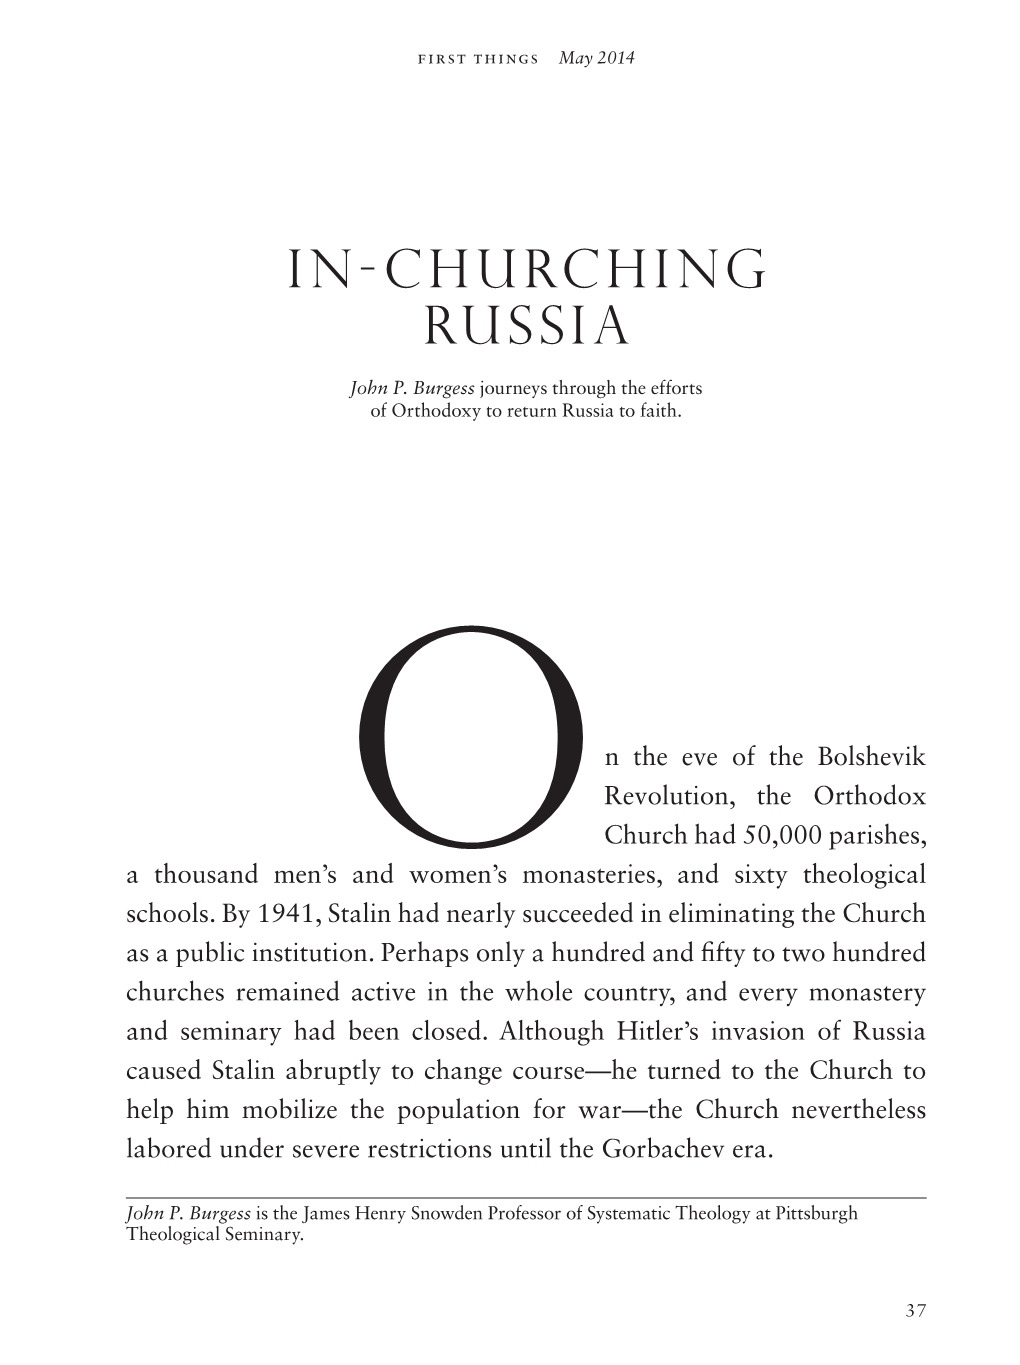 In-Churching Russia